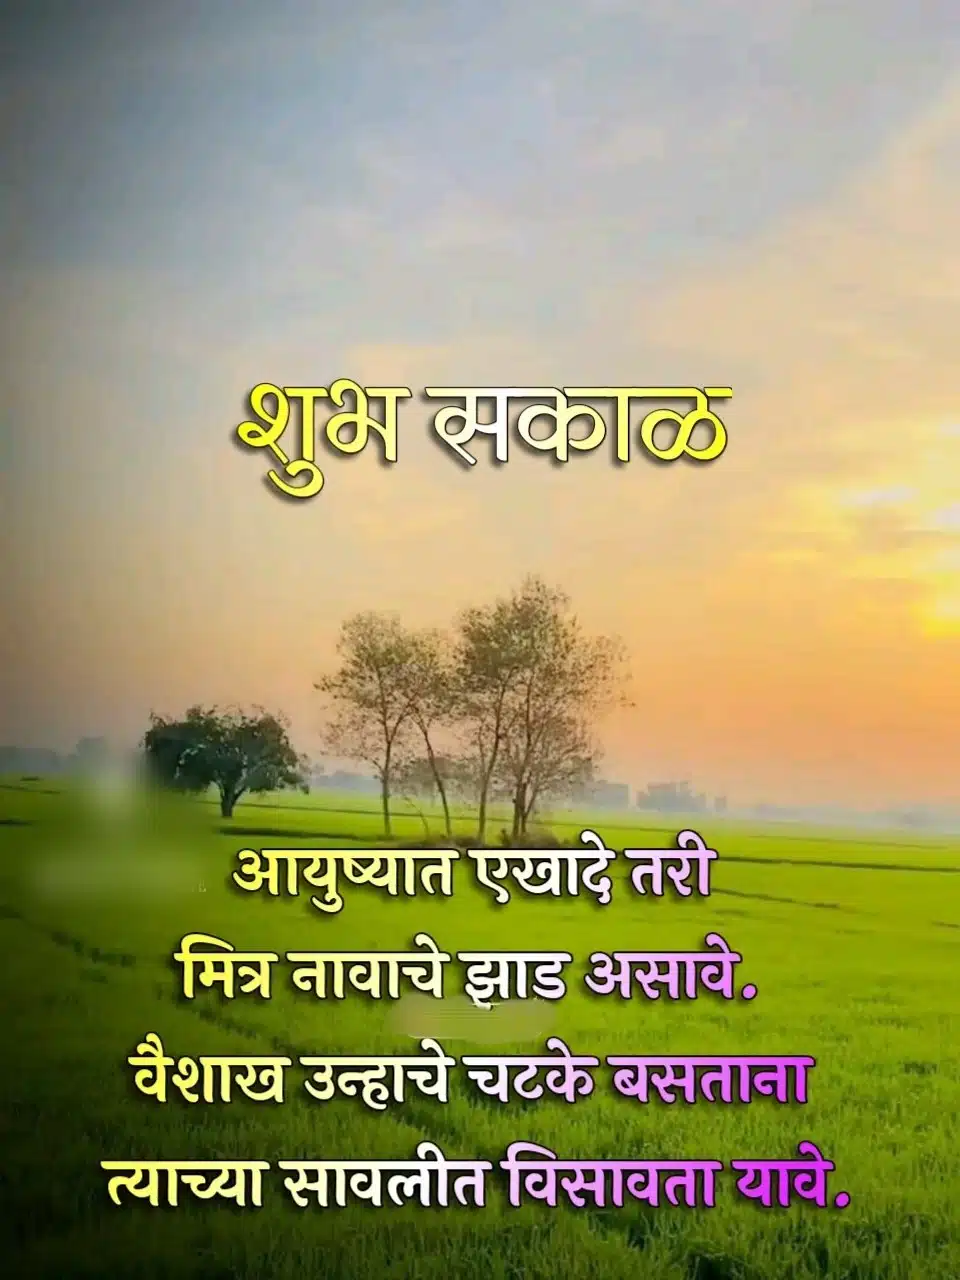 Good Morning Images In Marathi For Friends, Maitri Good Morning